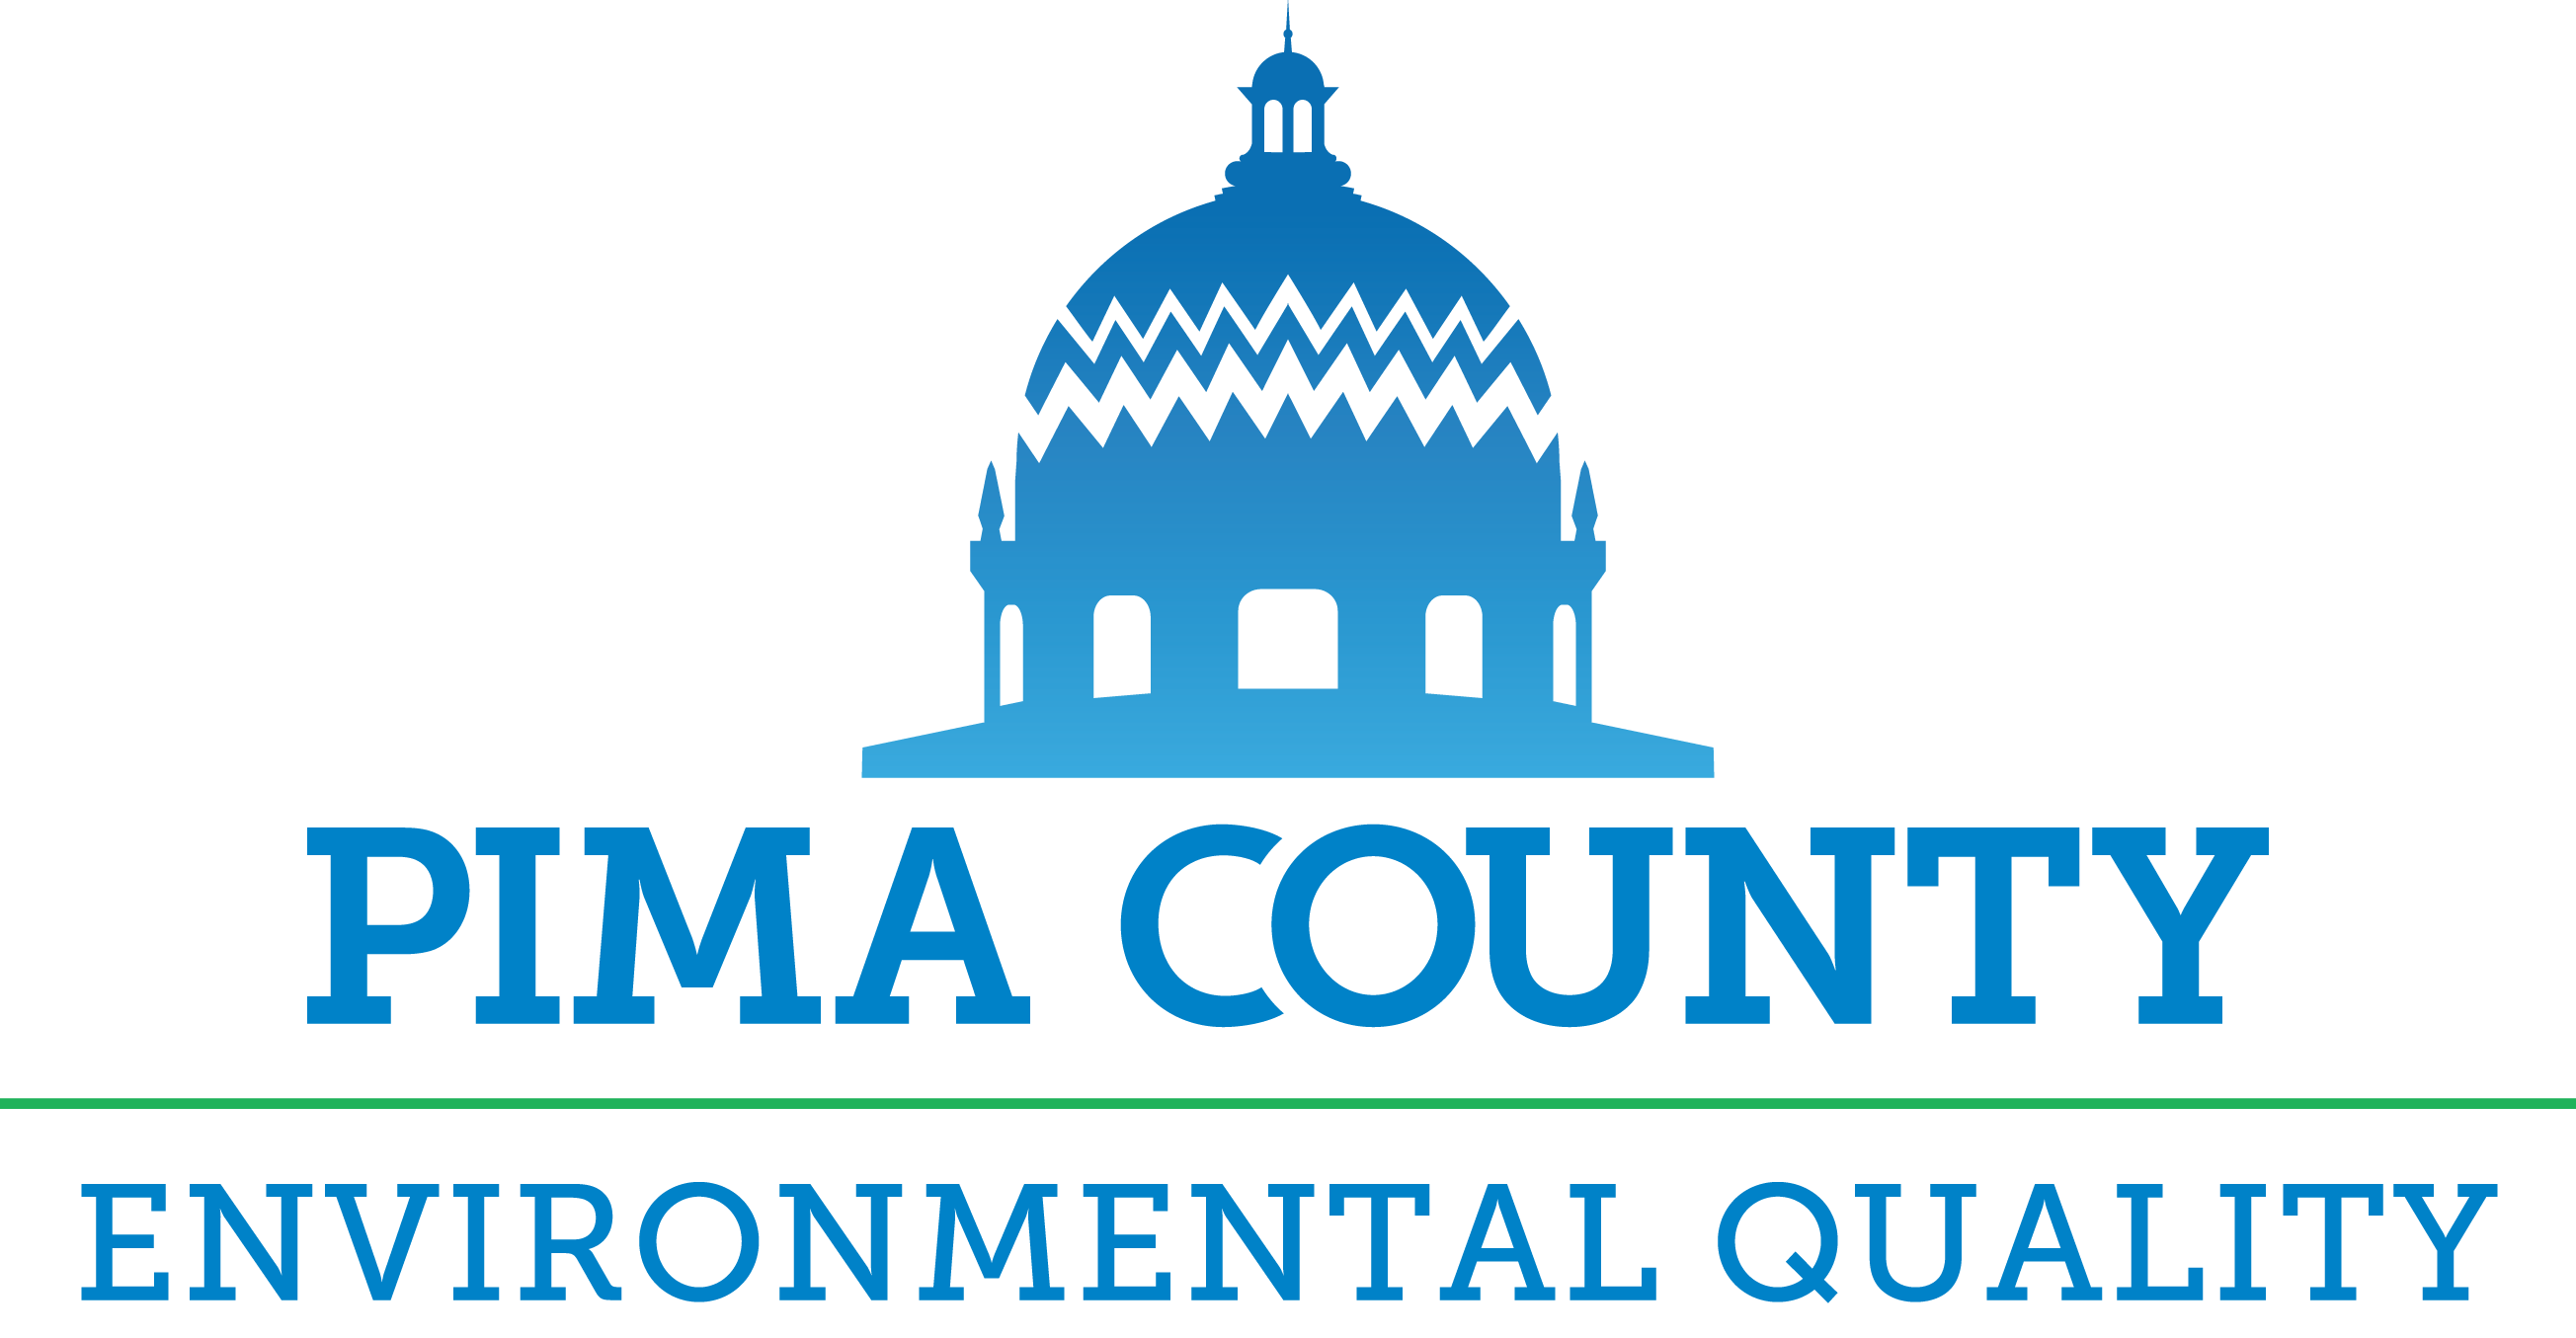 Pima County Environmental Quality logo